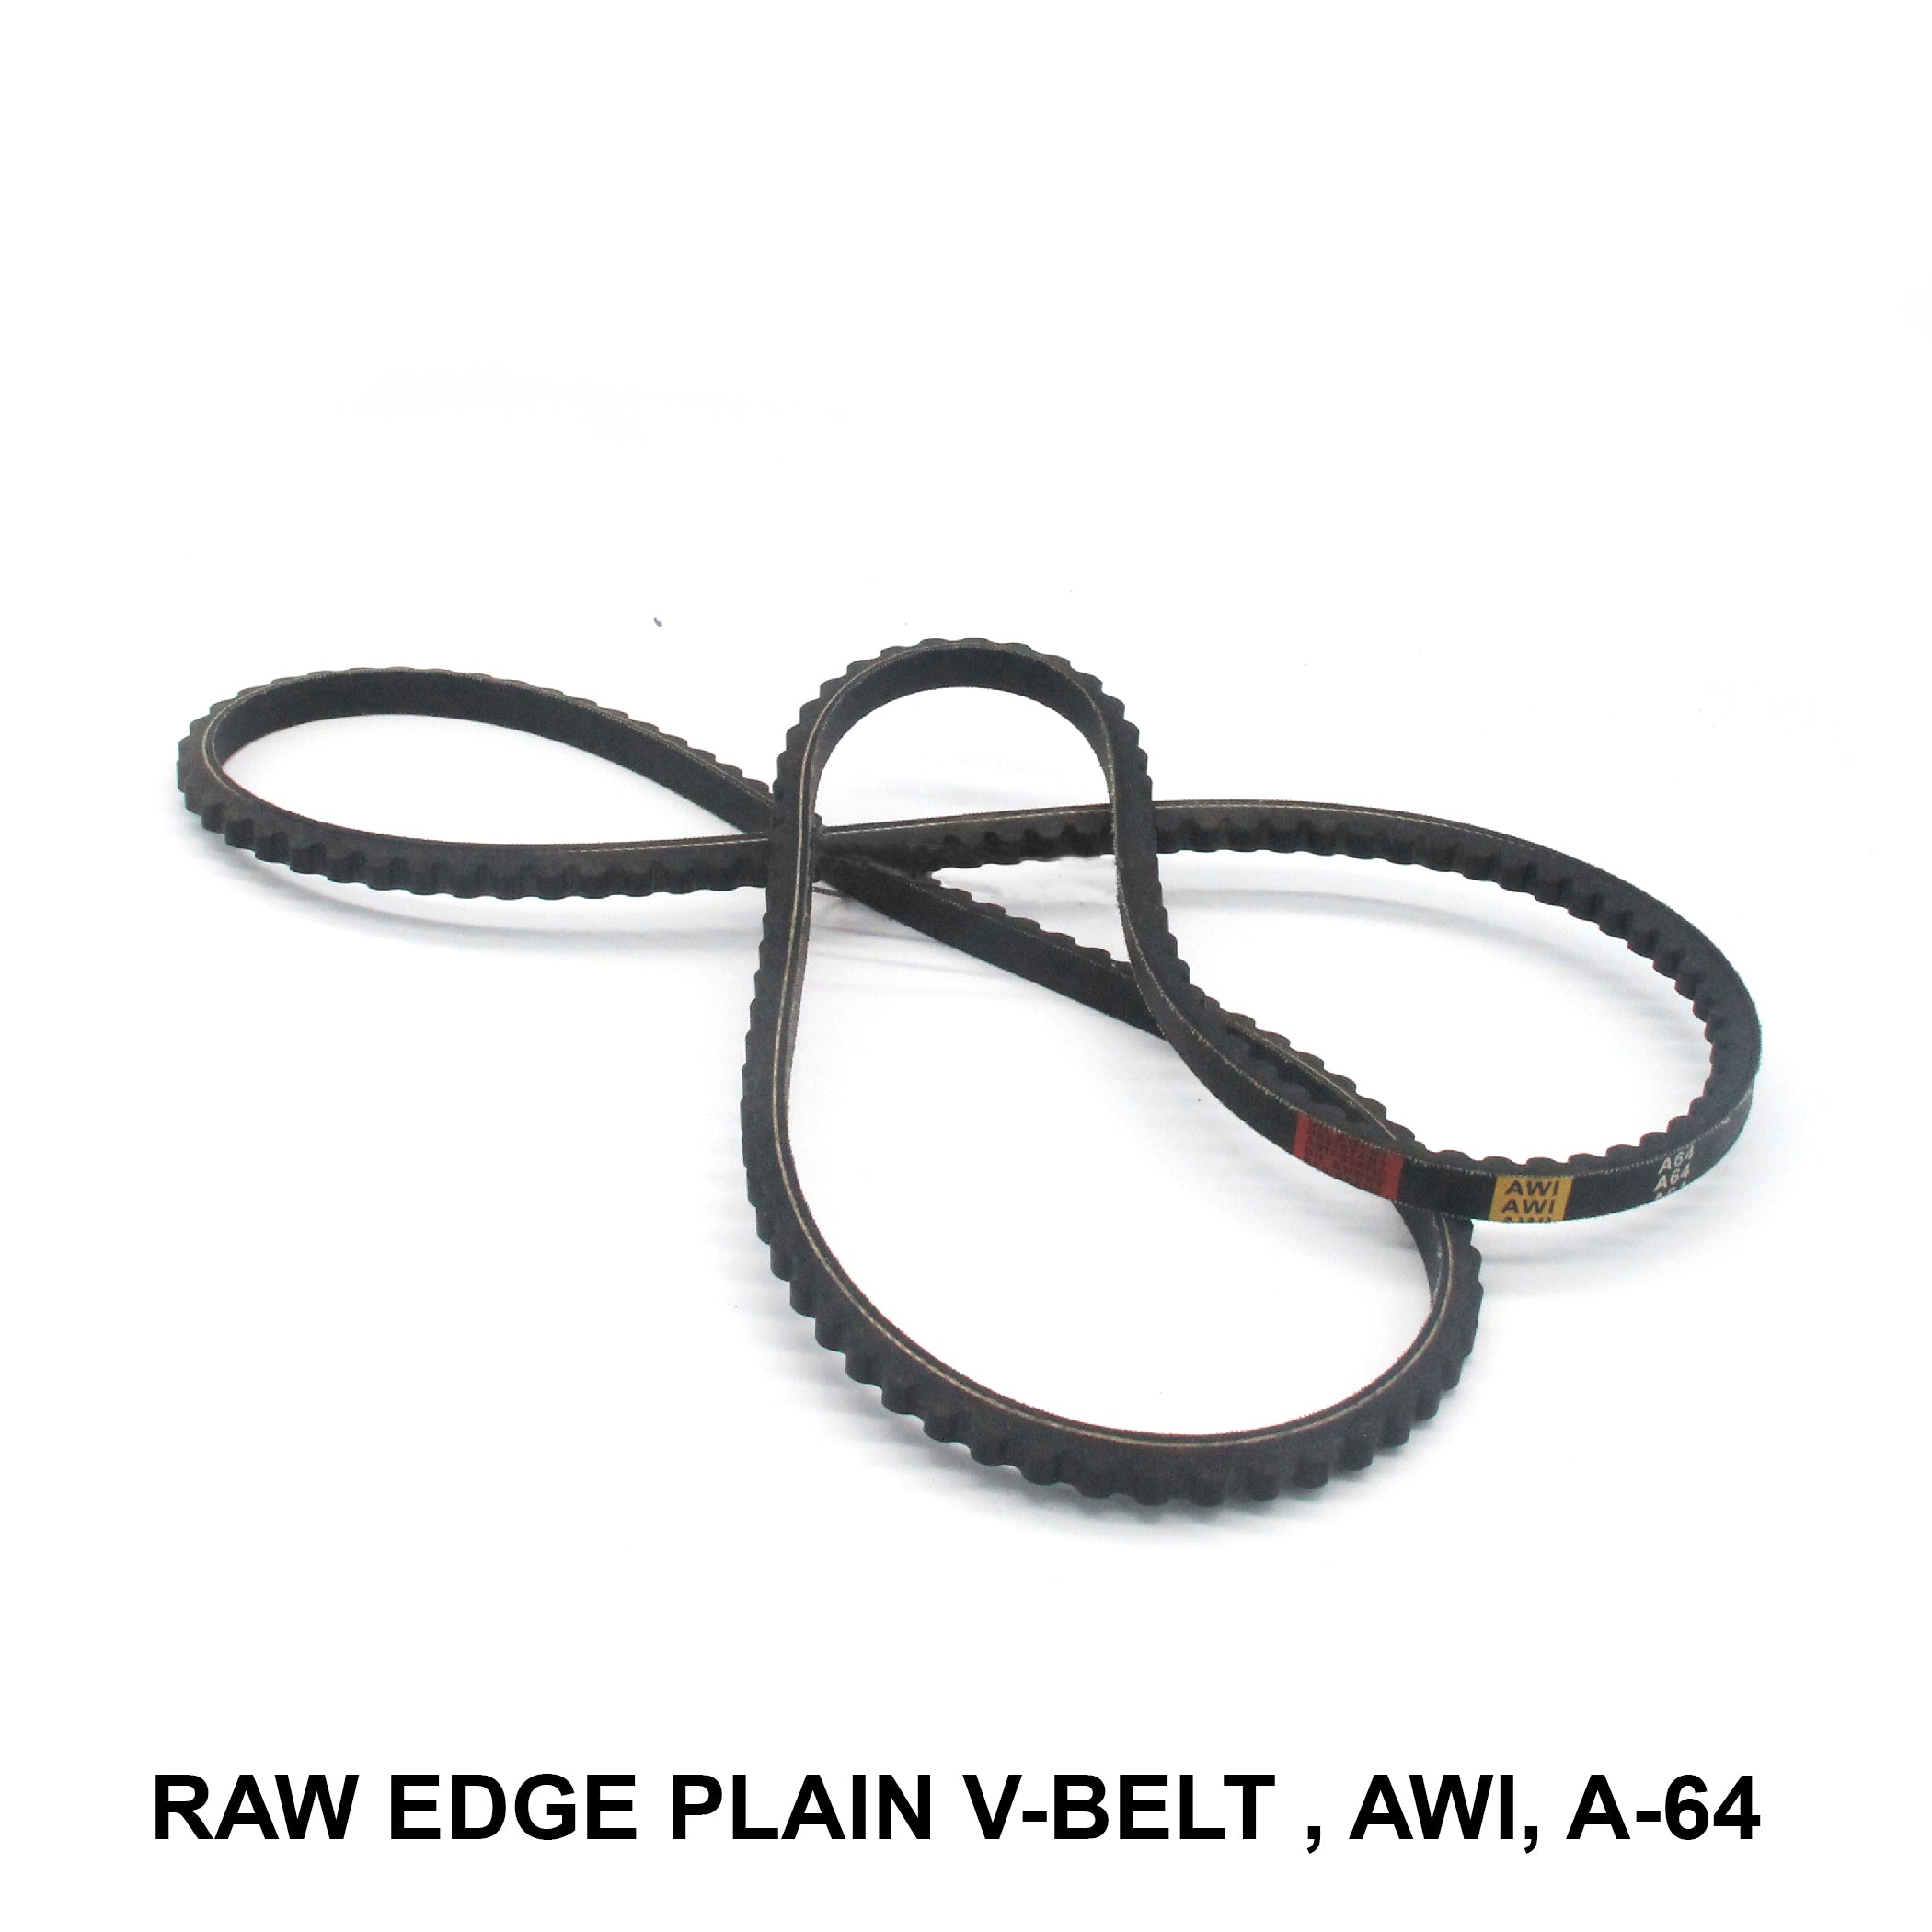 Raw Edge Plain V-belt (REMF), AWI, A-64 (006678)